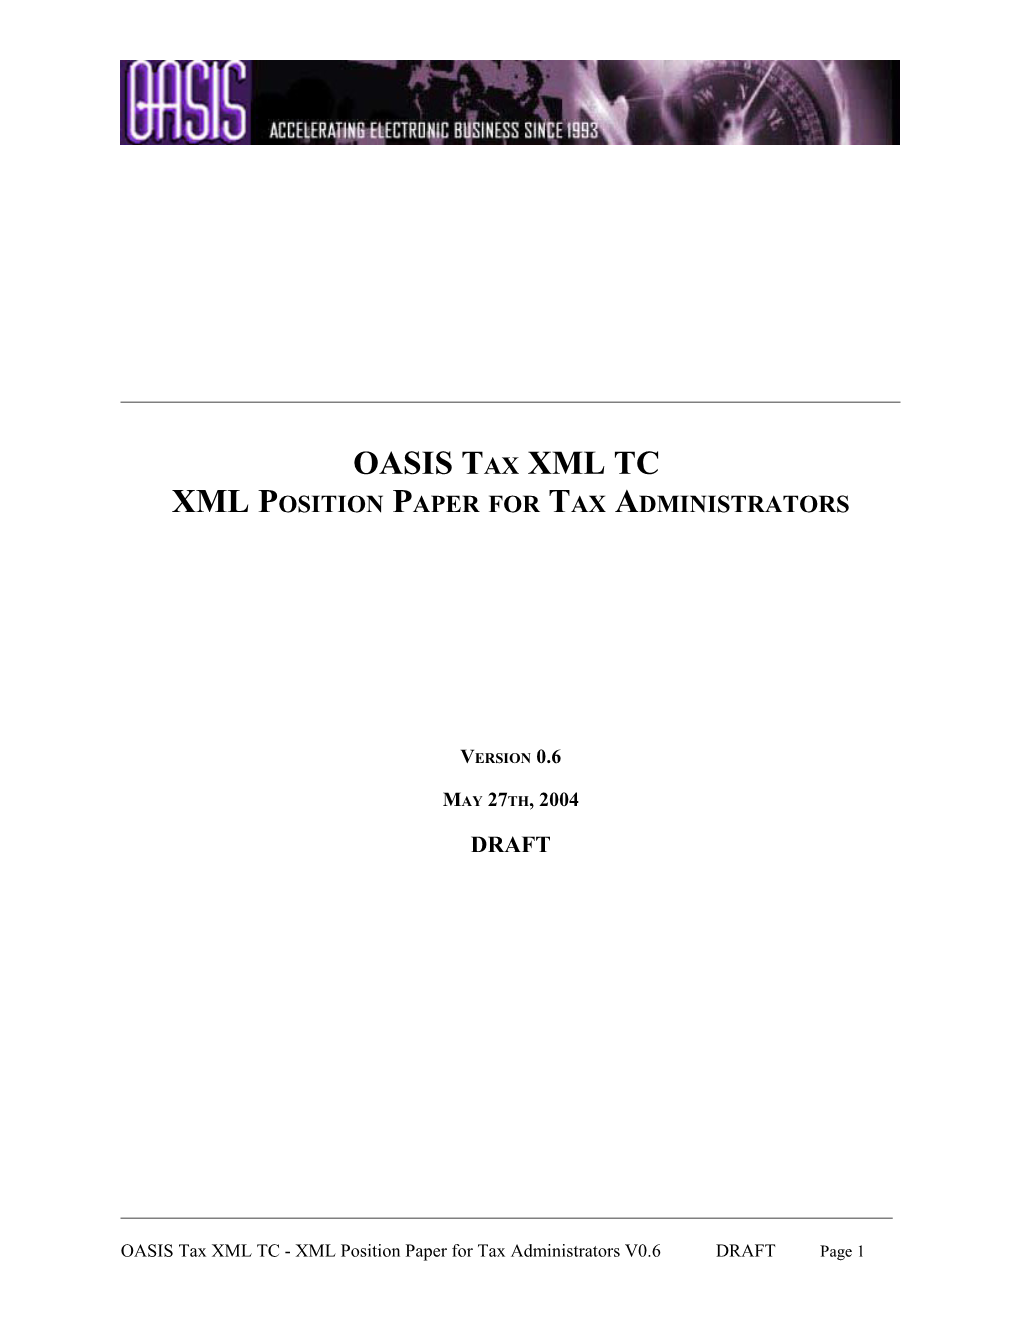 CRA XML White Paper